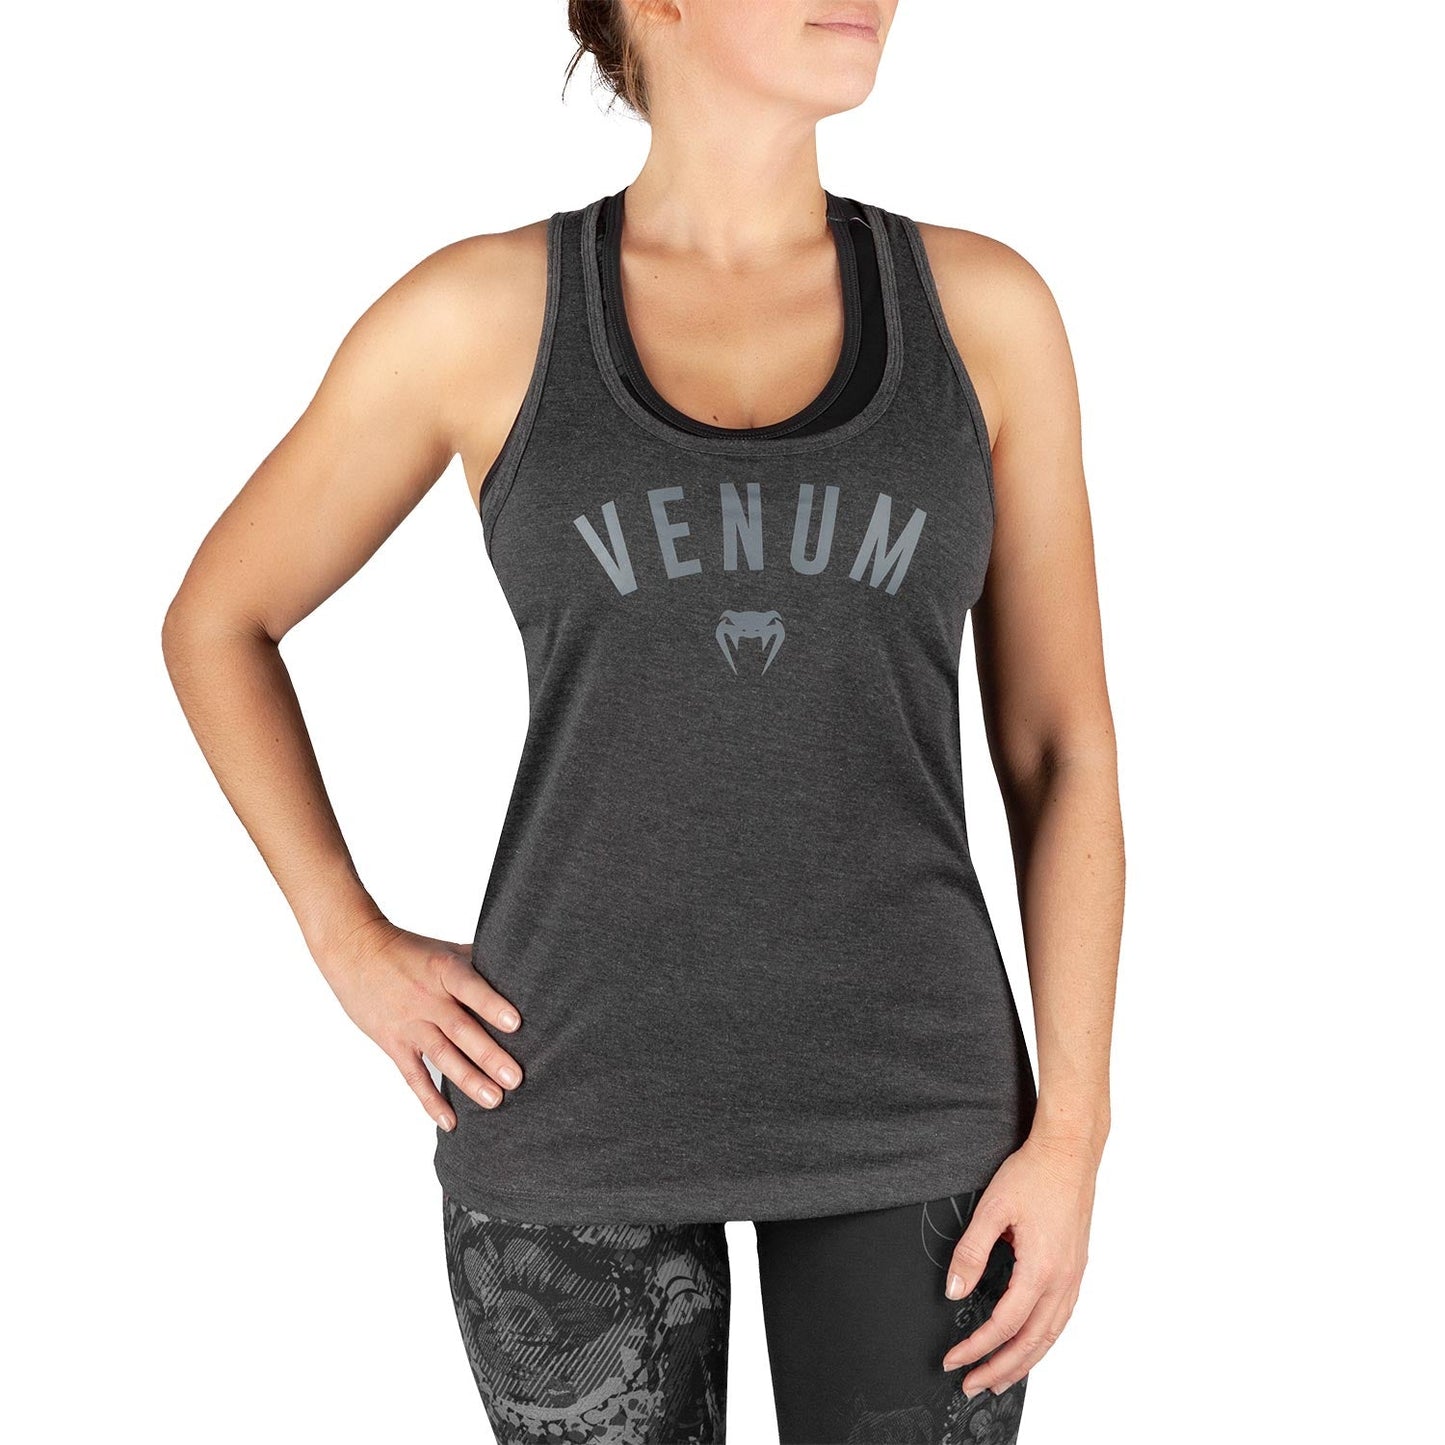 Venum Classic Tank Top - For Women - Dark heather grey